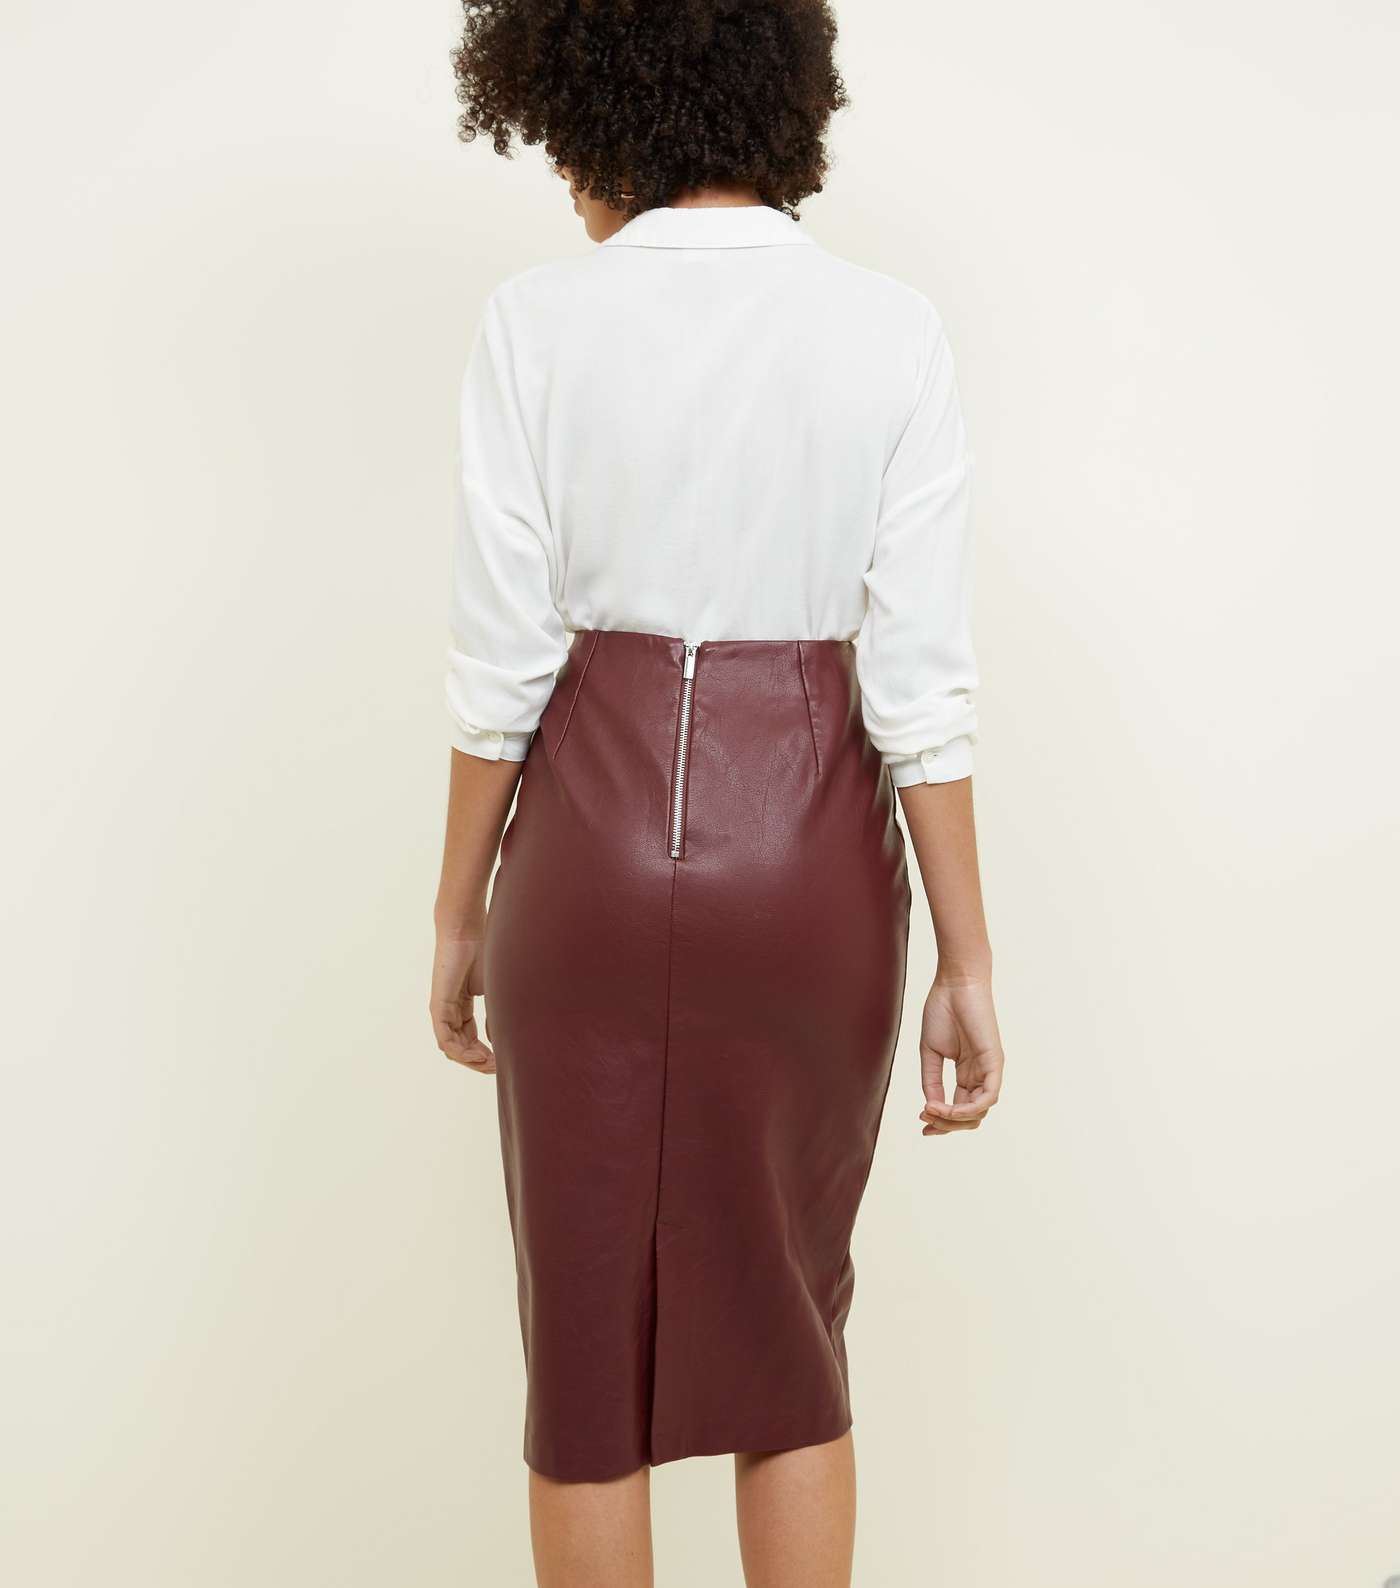 Burgundy Leather-Look Pencil Skirt Image 3